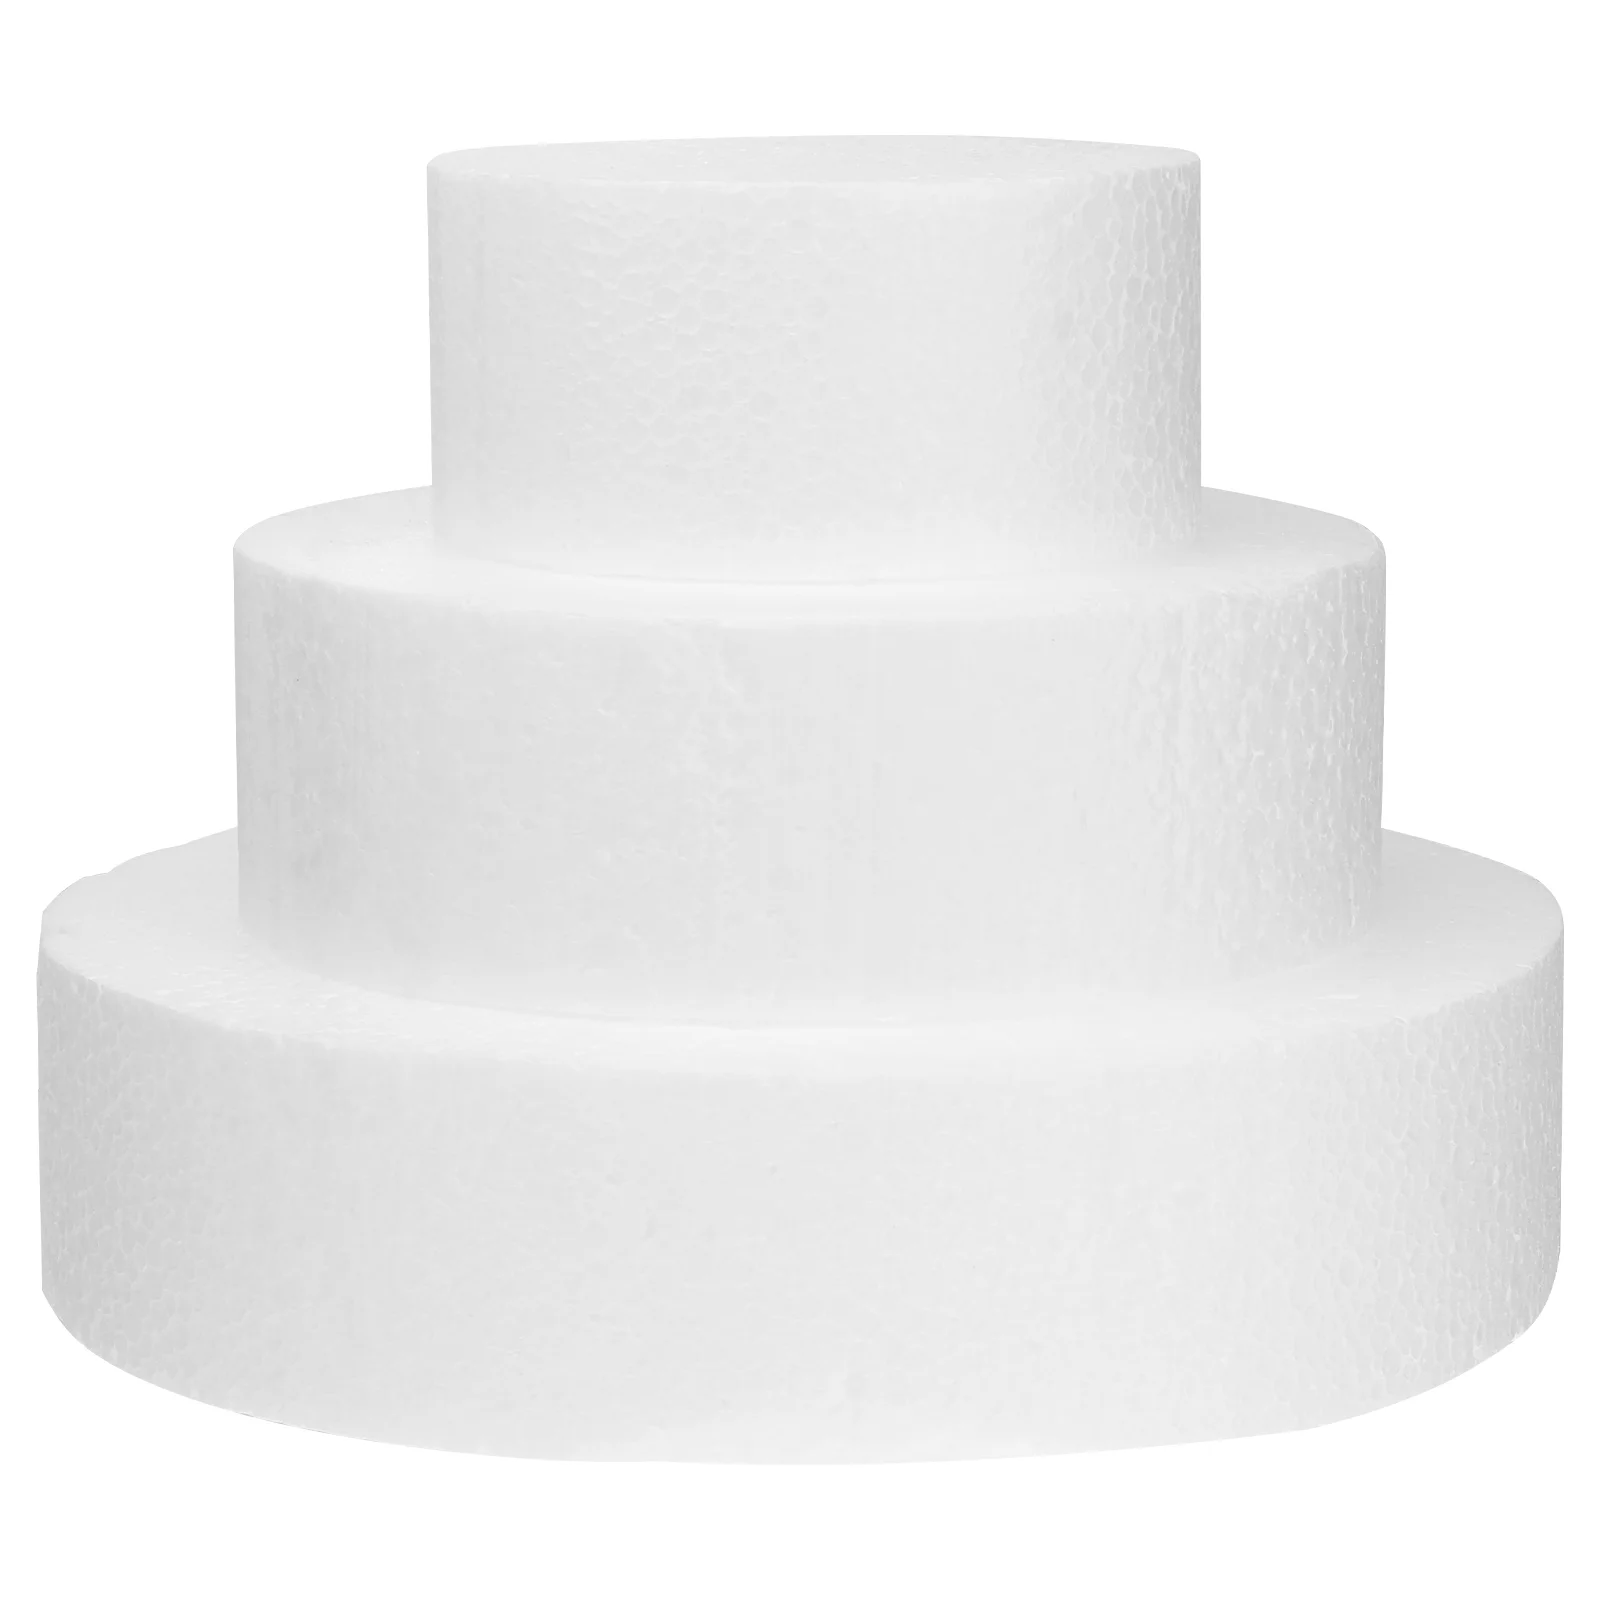 Cake Foam Dummy Dummies Round Fake Molds Polystyrene Set Rounds Practice Wedding Decorating Model Baking Display Shapes Pan Mold